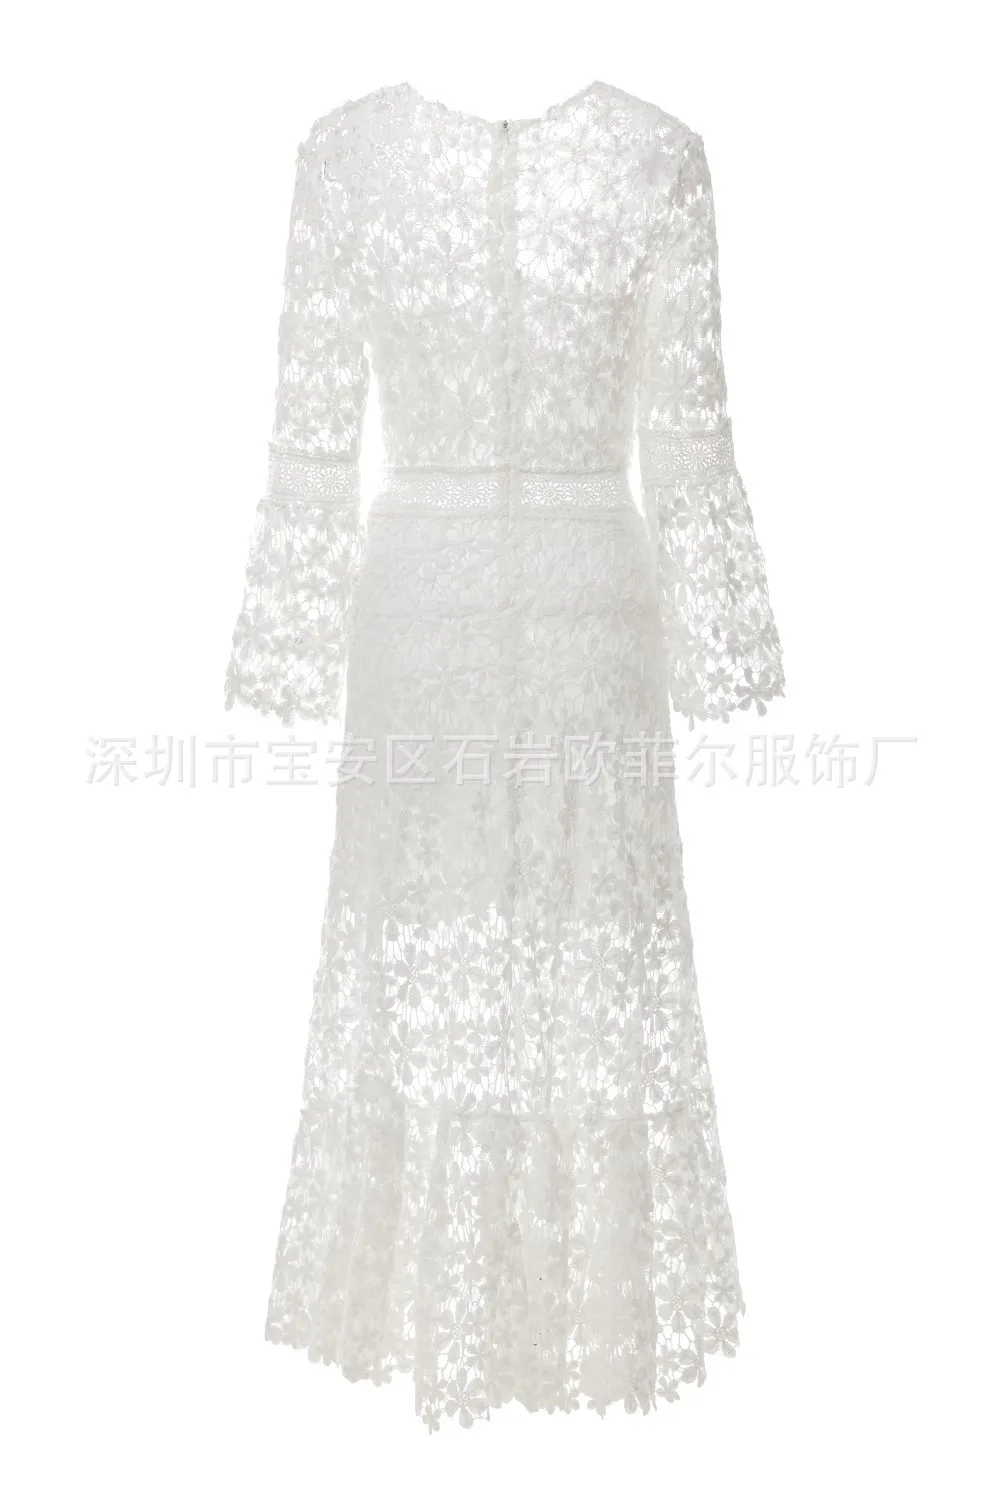 

Plus Size 3xl Women Bodycon Dress Sky Blue White Sundress Japan Style Hollow Out Lace Dress Solid Vestidos Oversize Women Dress